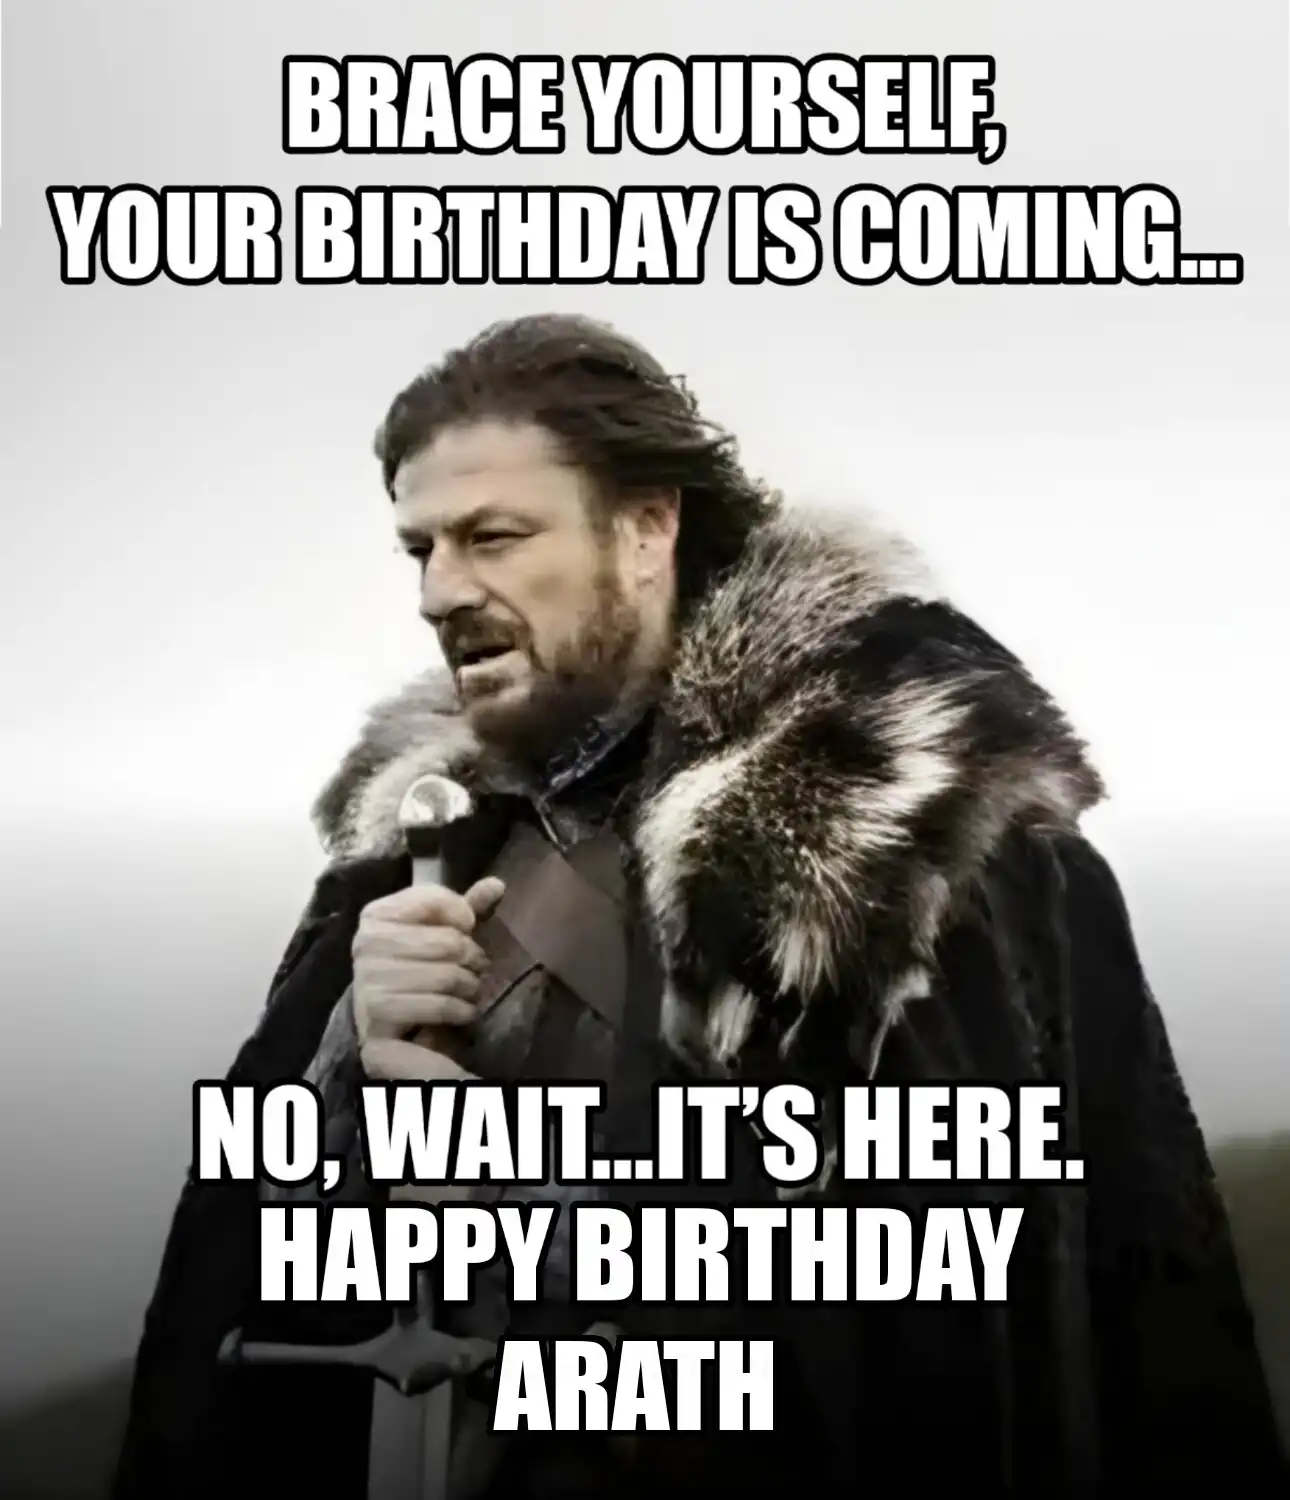 Happy Birthday Arath Brace Yourself Your Birthday Is Coming Meme